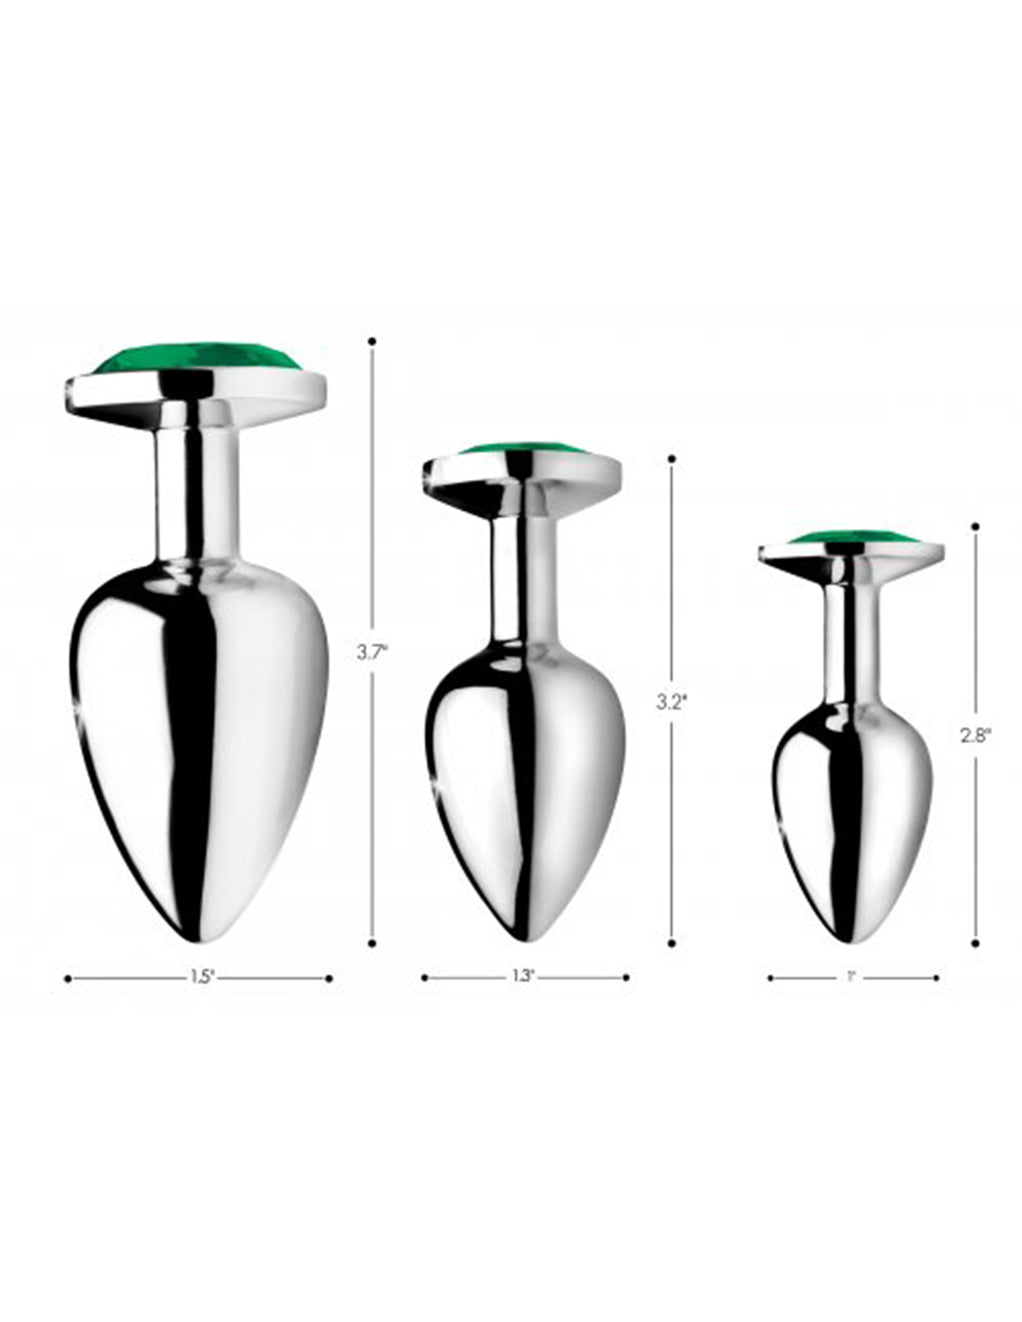 Emerald Gem Anal Plug Set- Size dimensions